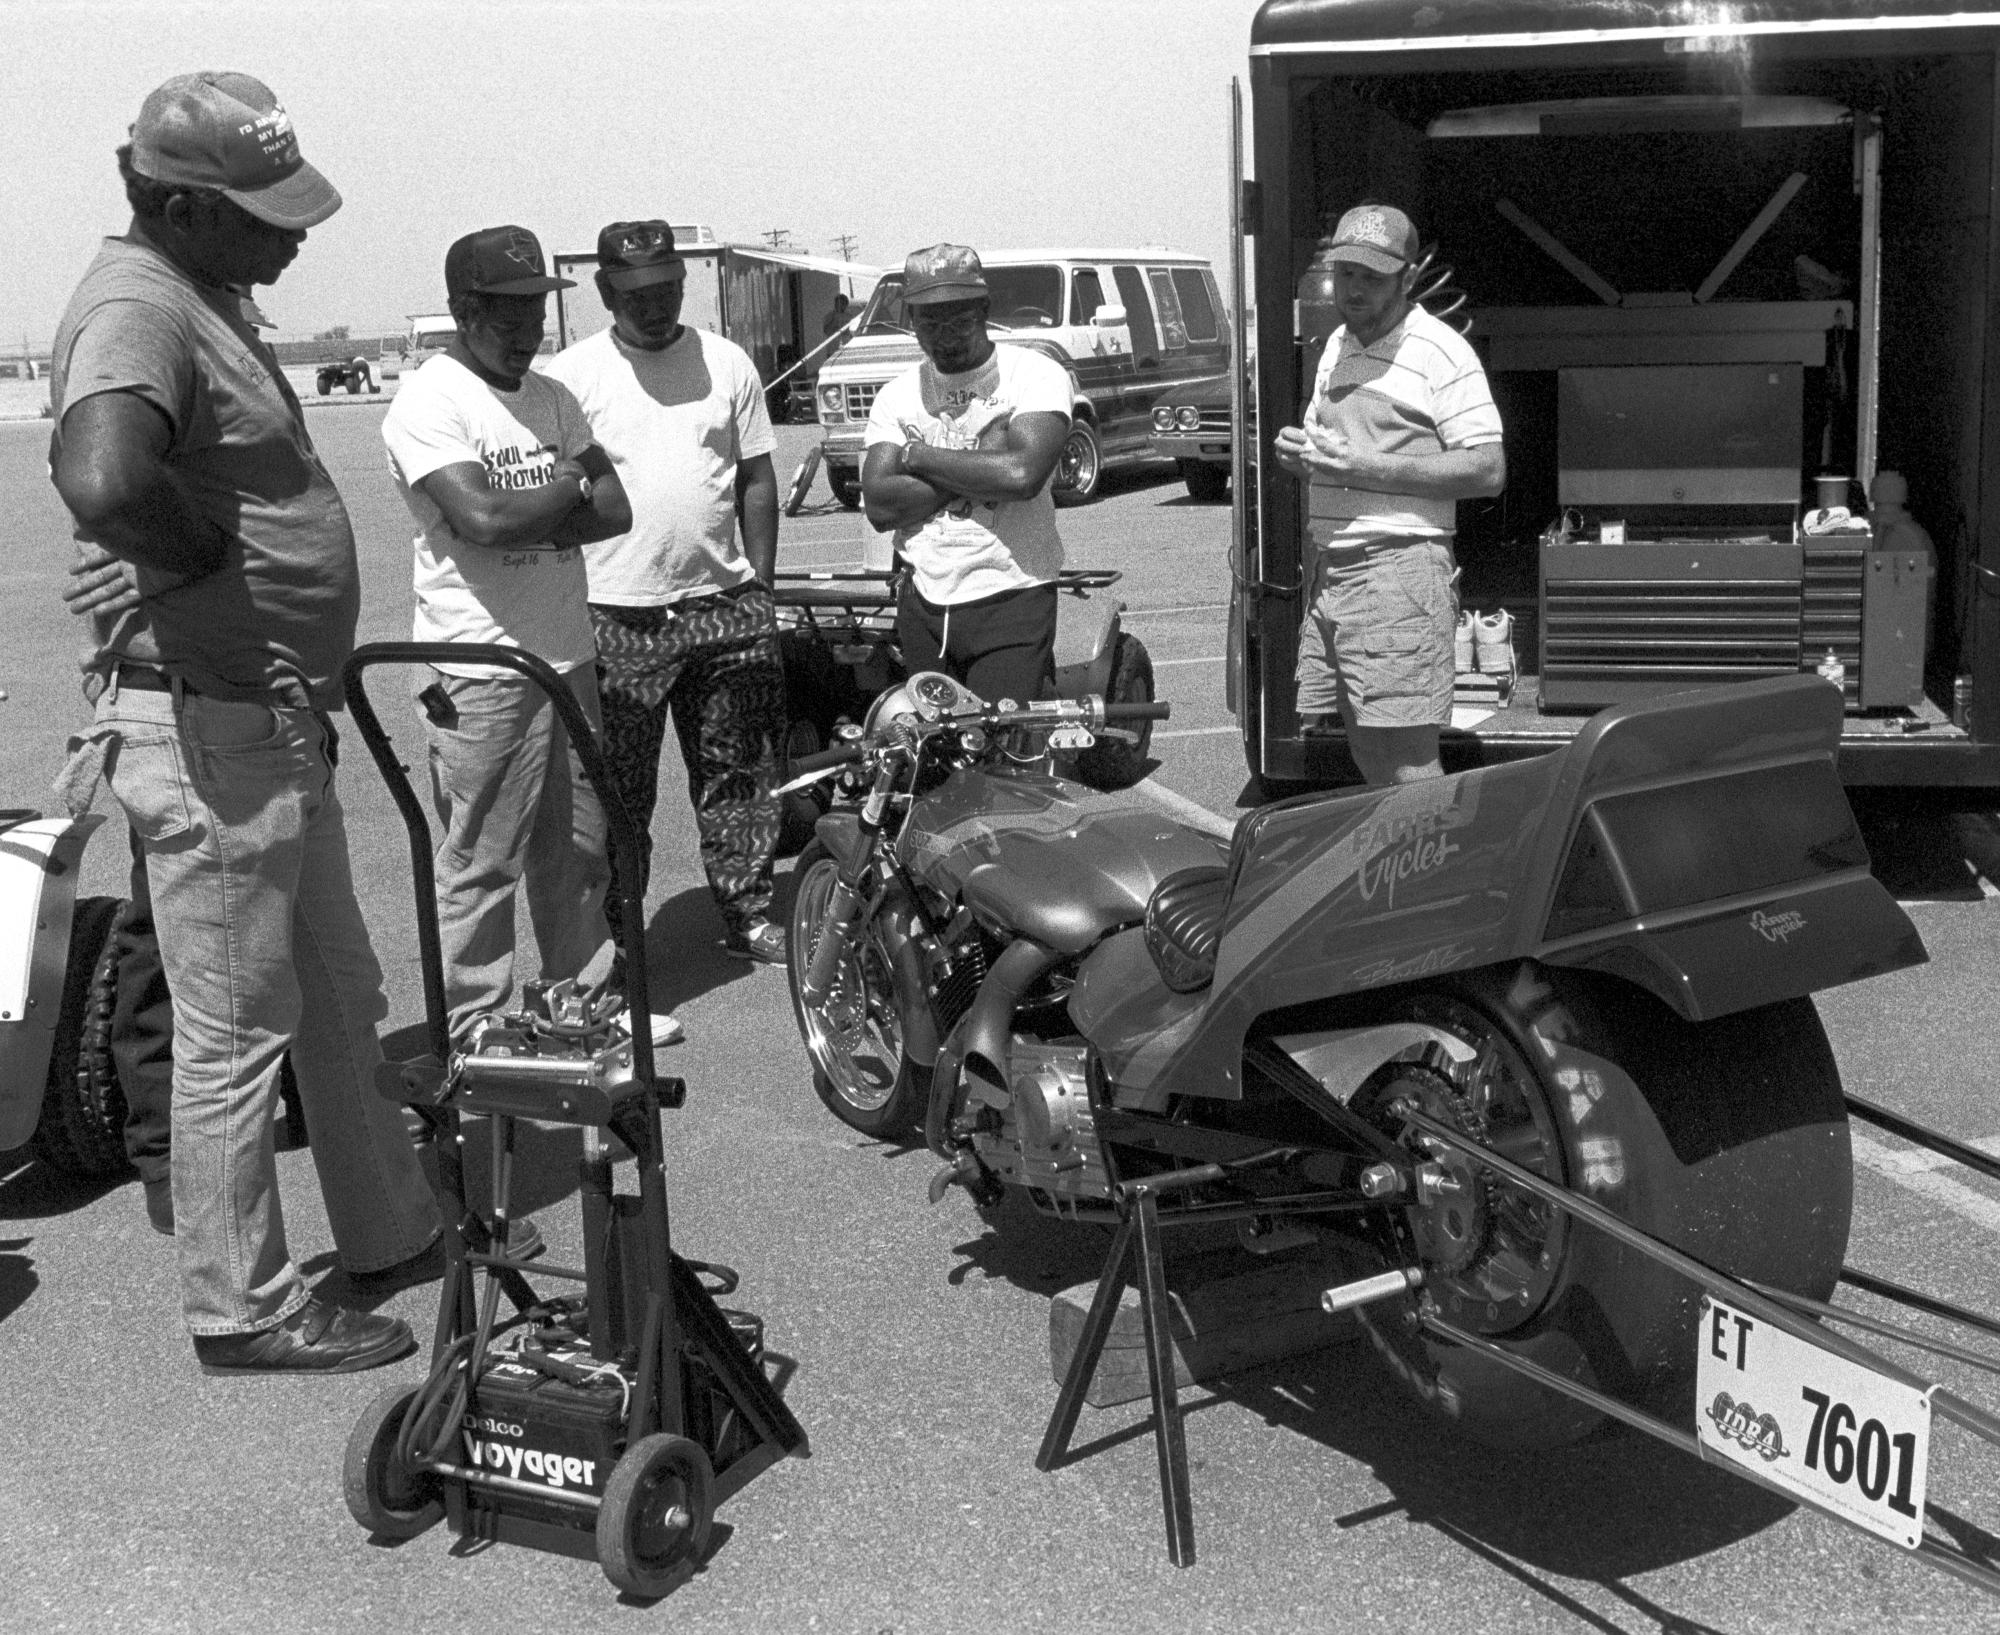 Texas Motor Drag Racing (1991) - Drag Racing BW #26